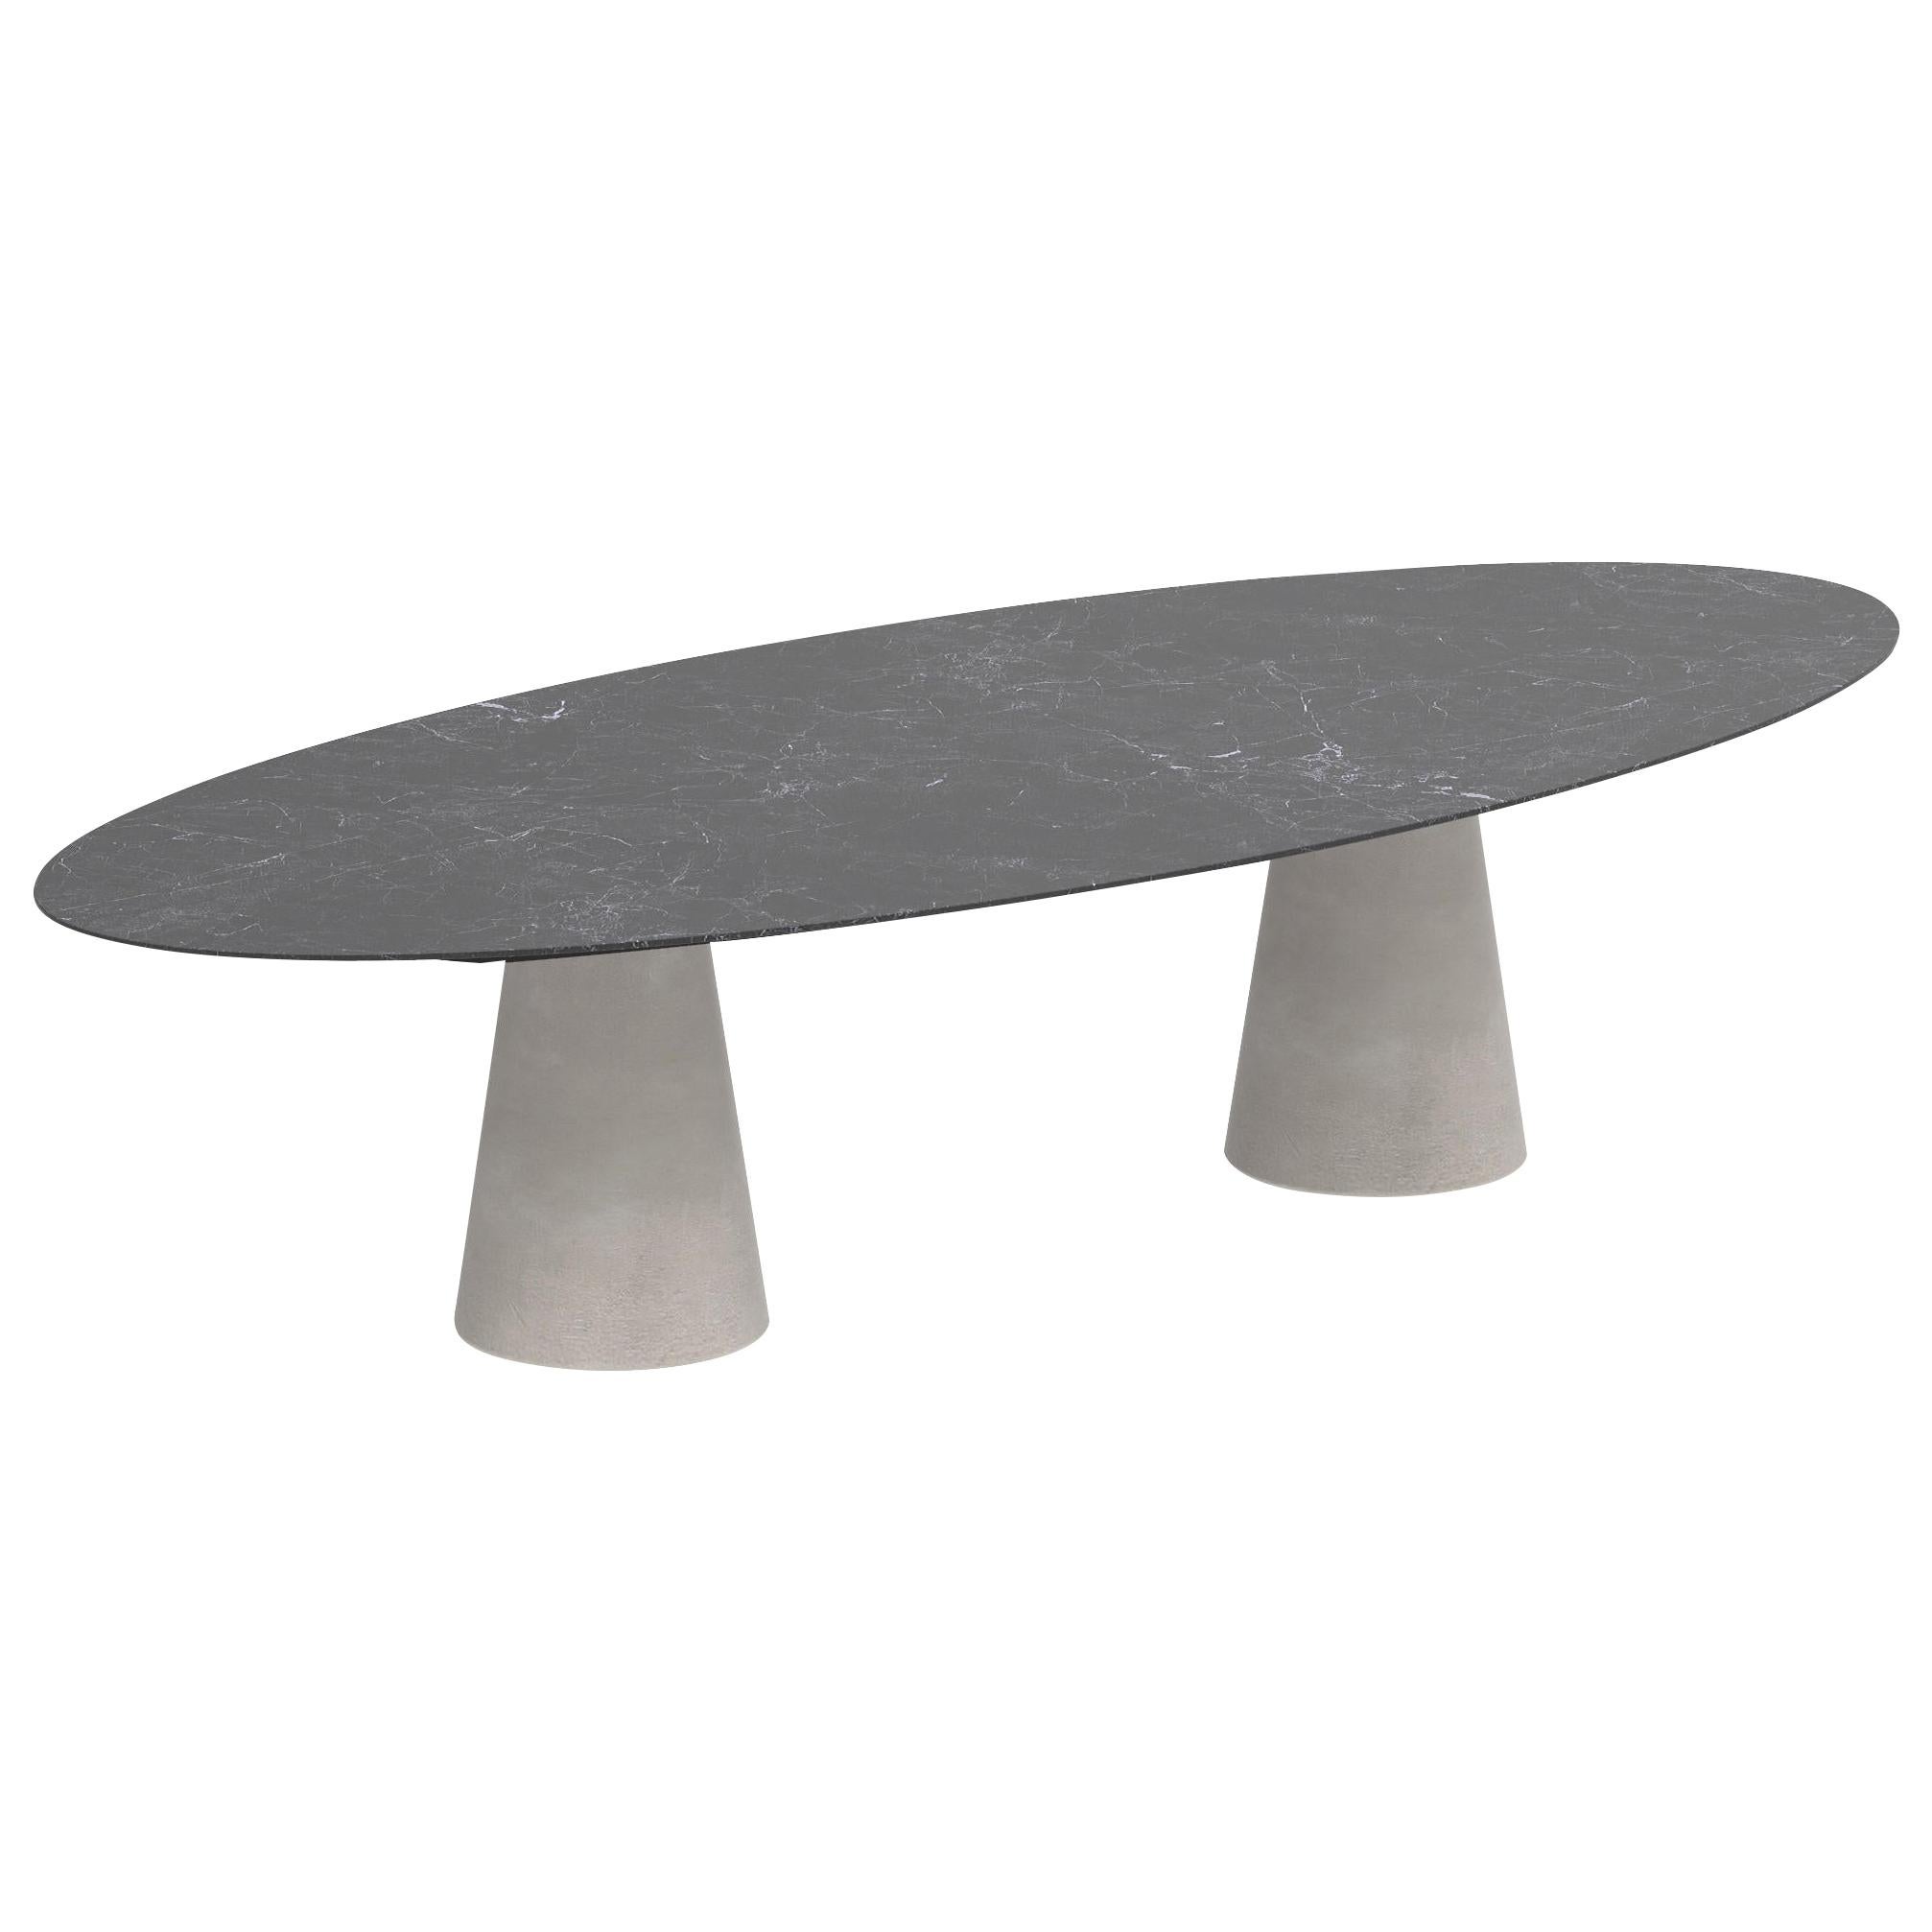 Outdoor Royal Botania Conix Oval Table design by Kris Van Puyvelde For Sale